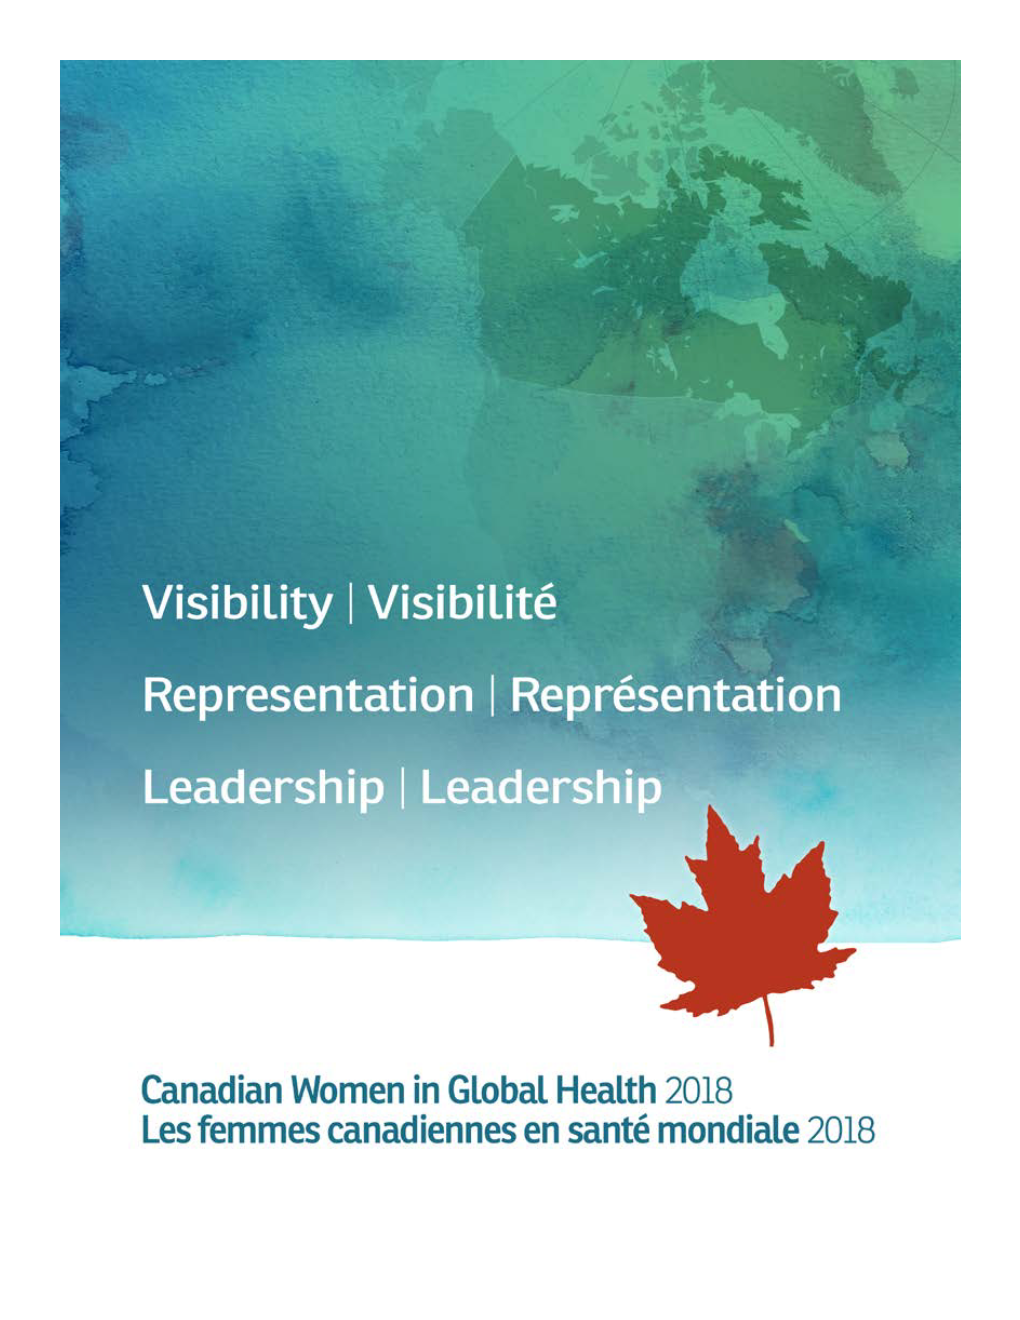 Canadian Women in Global Health (CWIGH) List 2018